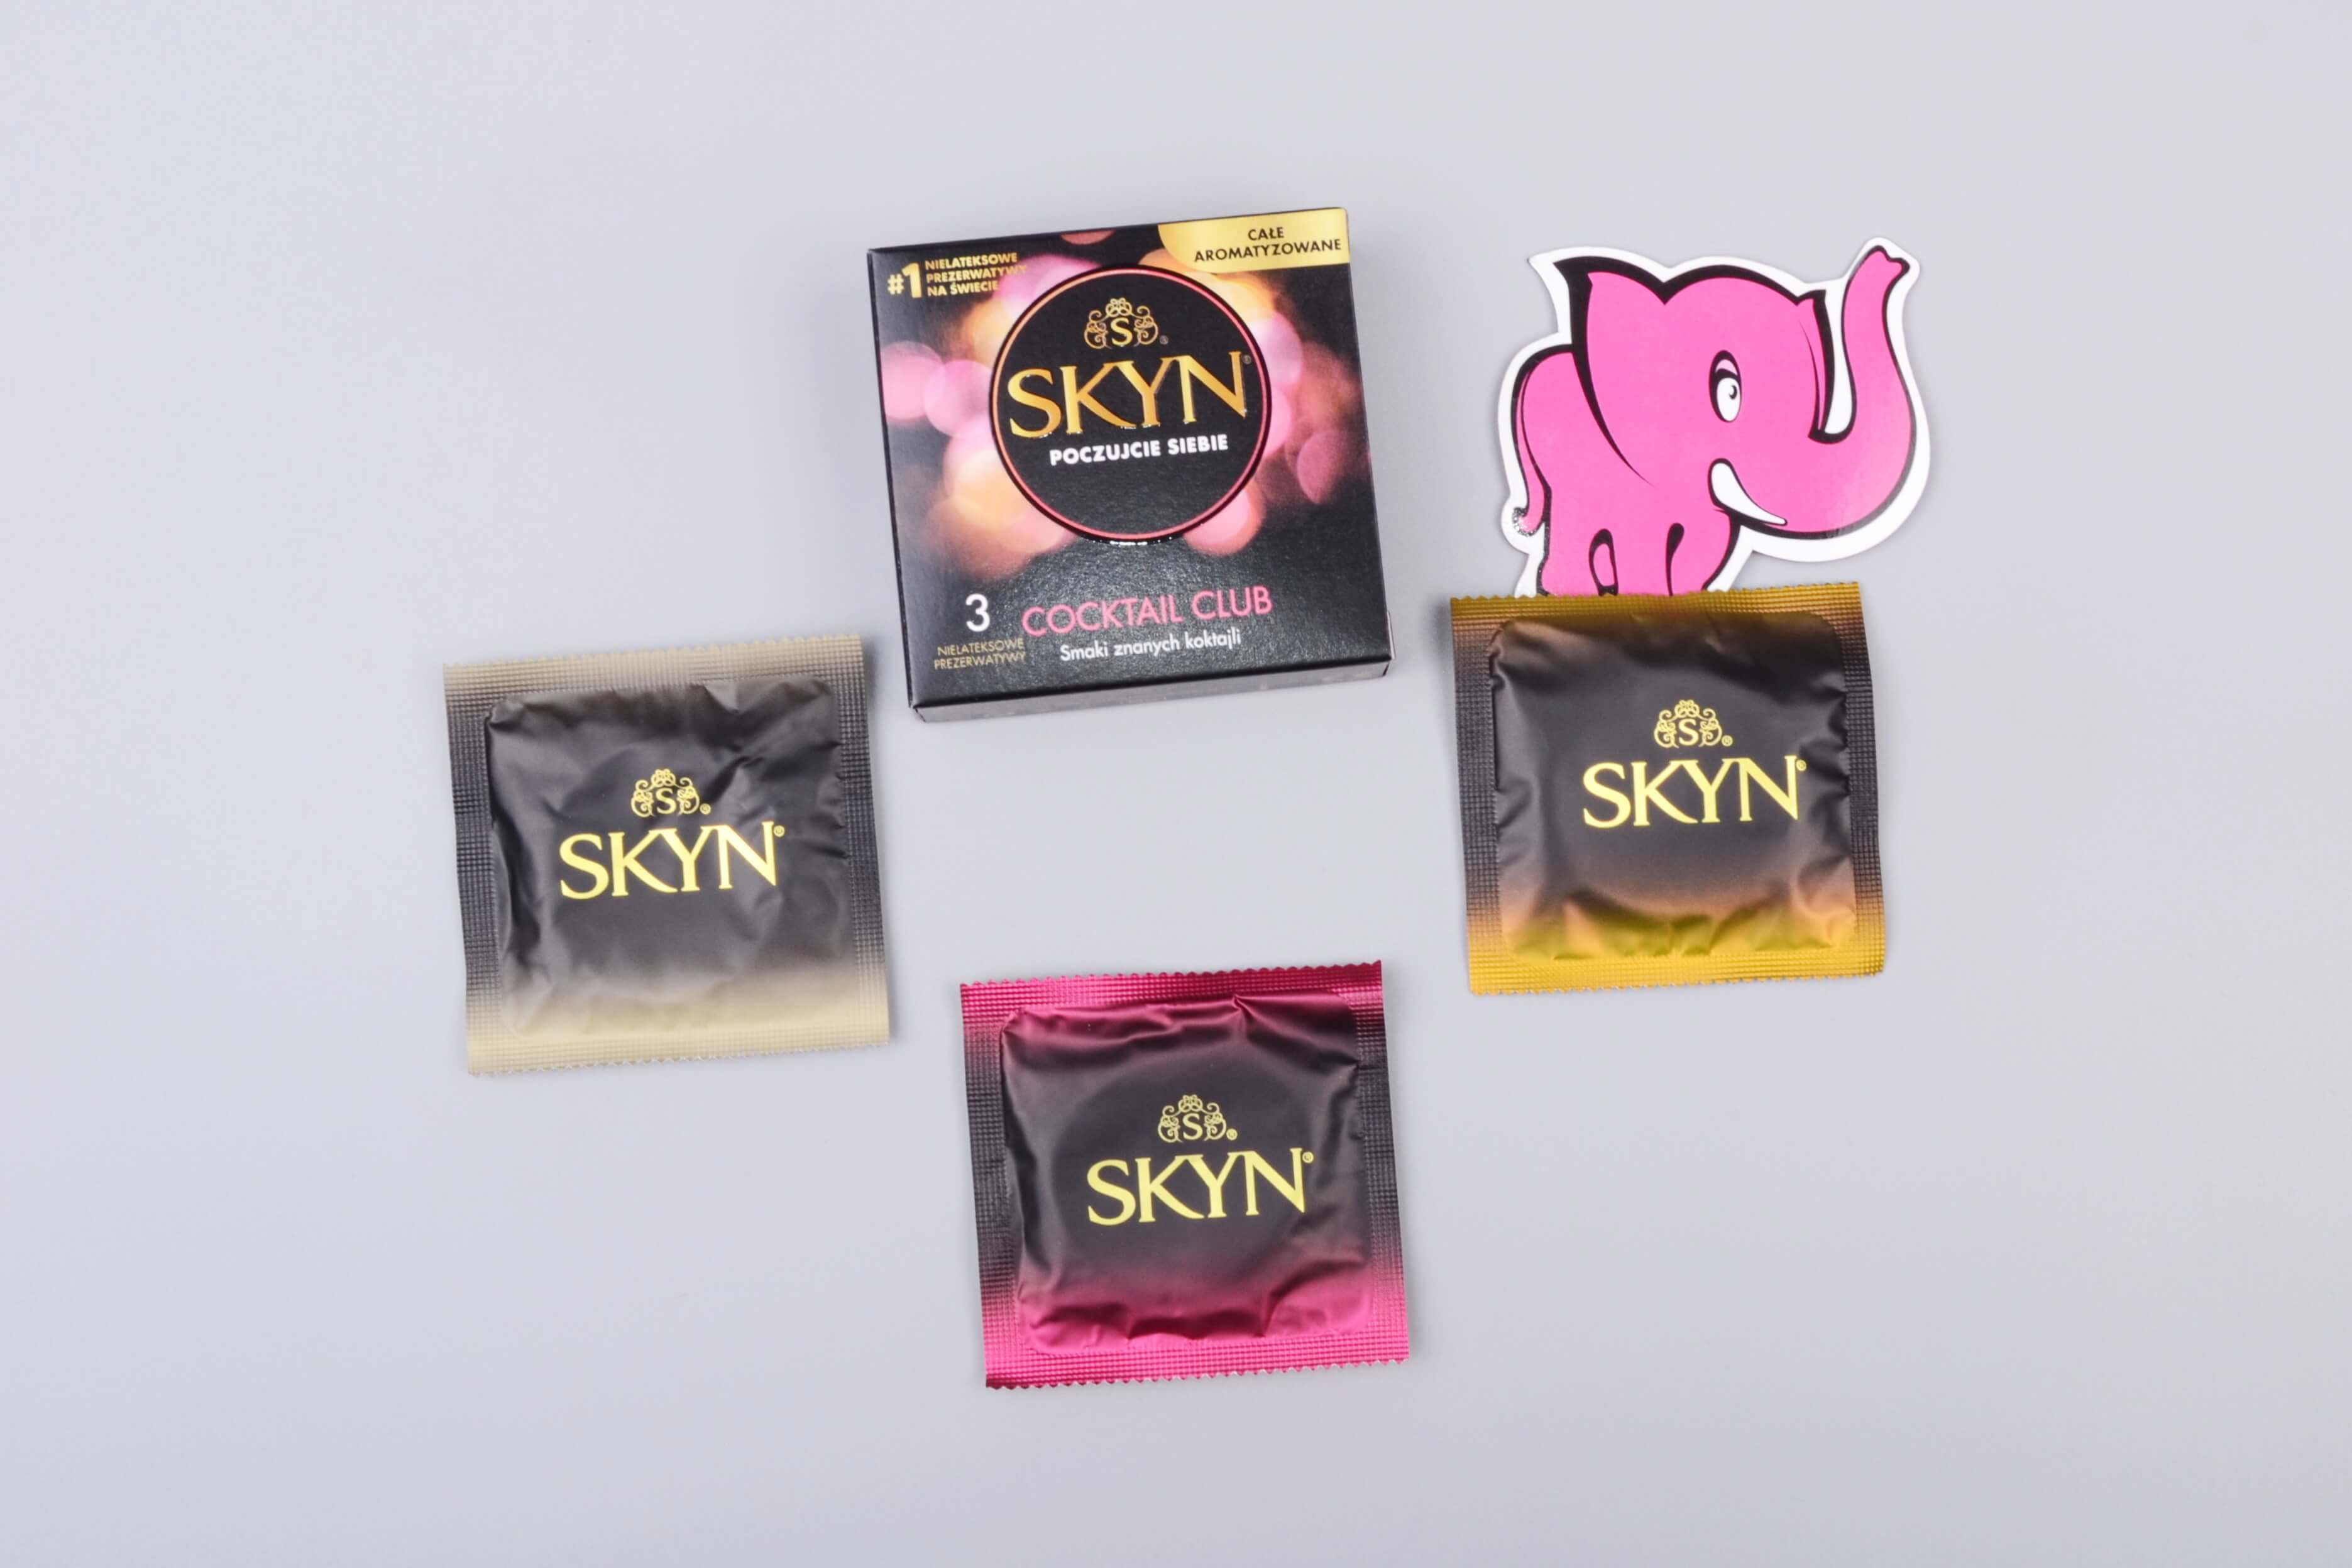 SKYN Cocktail Club – bezlatexové kondomy (3 ks)